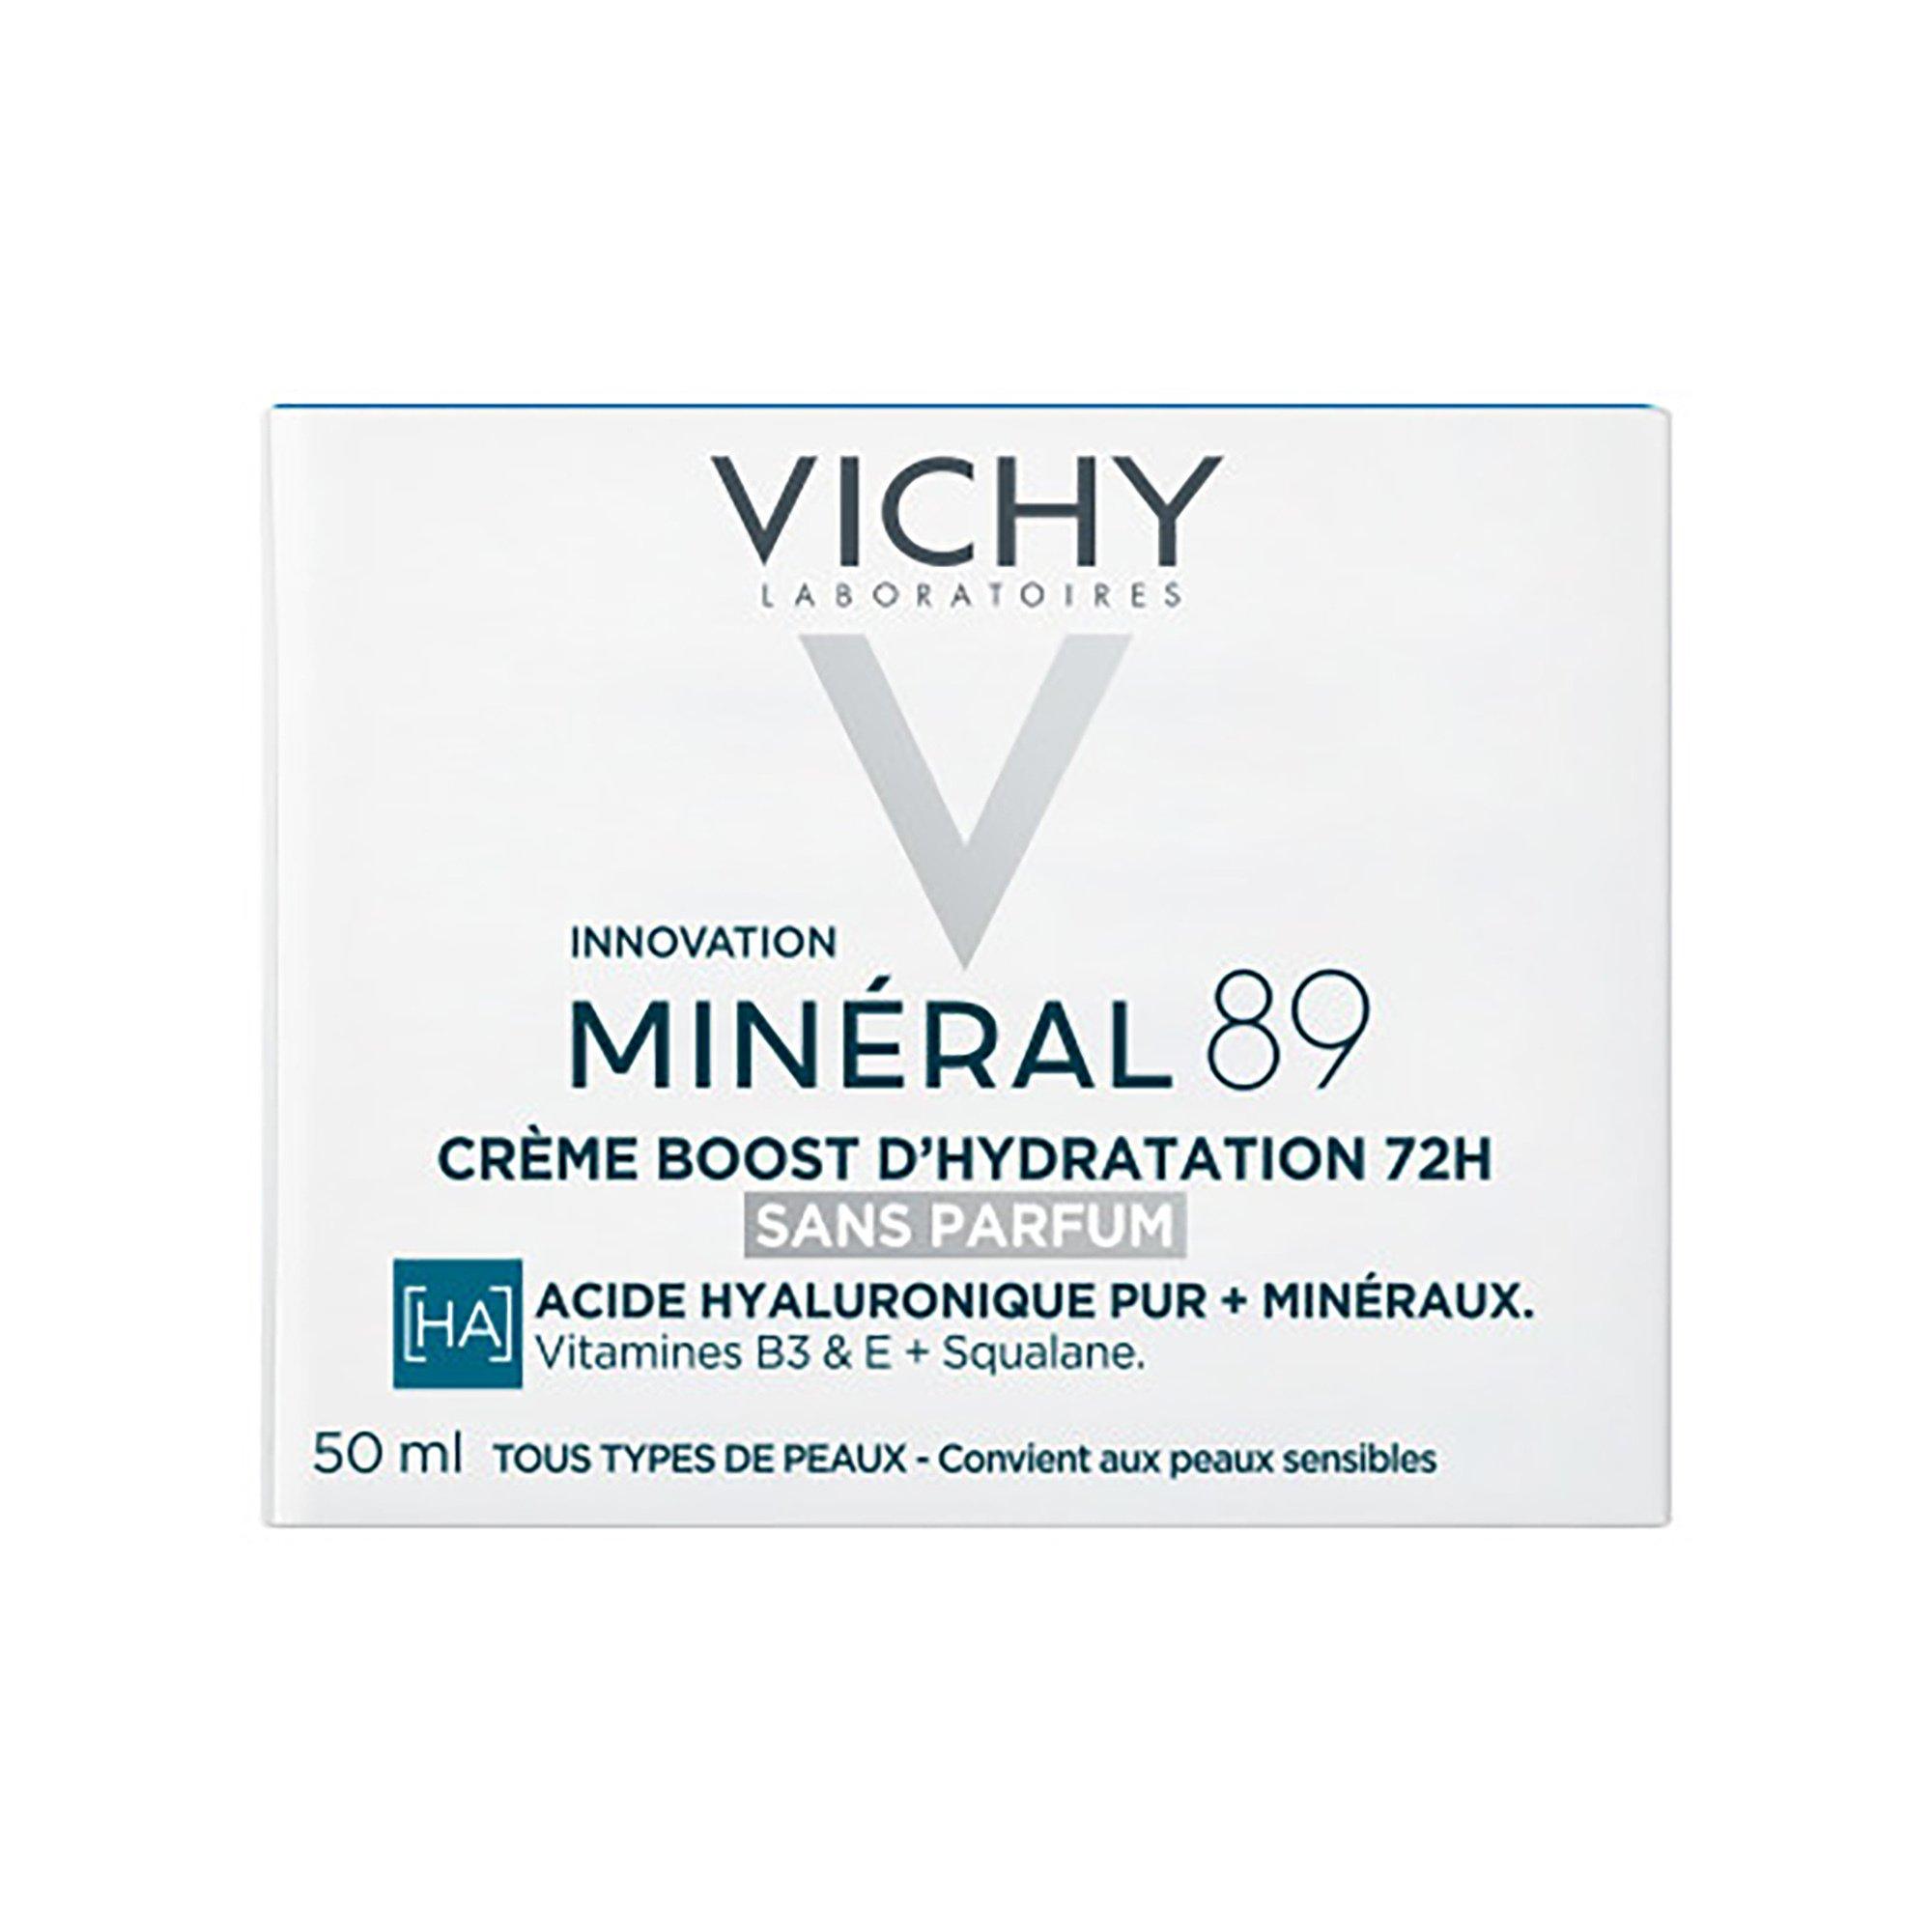 VICHY Mineral 89 Gesichtscreme Minéral 89 Creme ohne Duft  